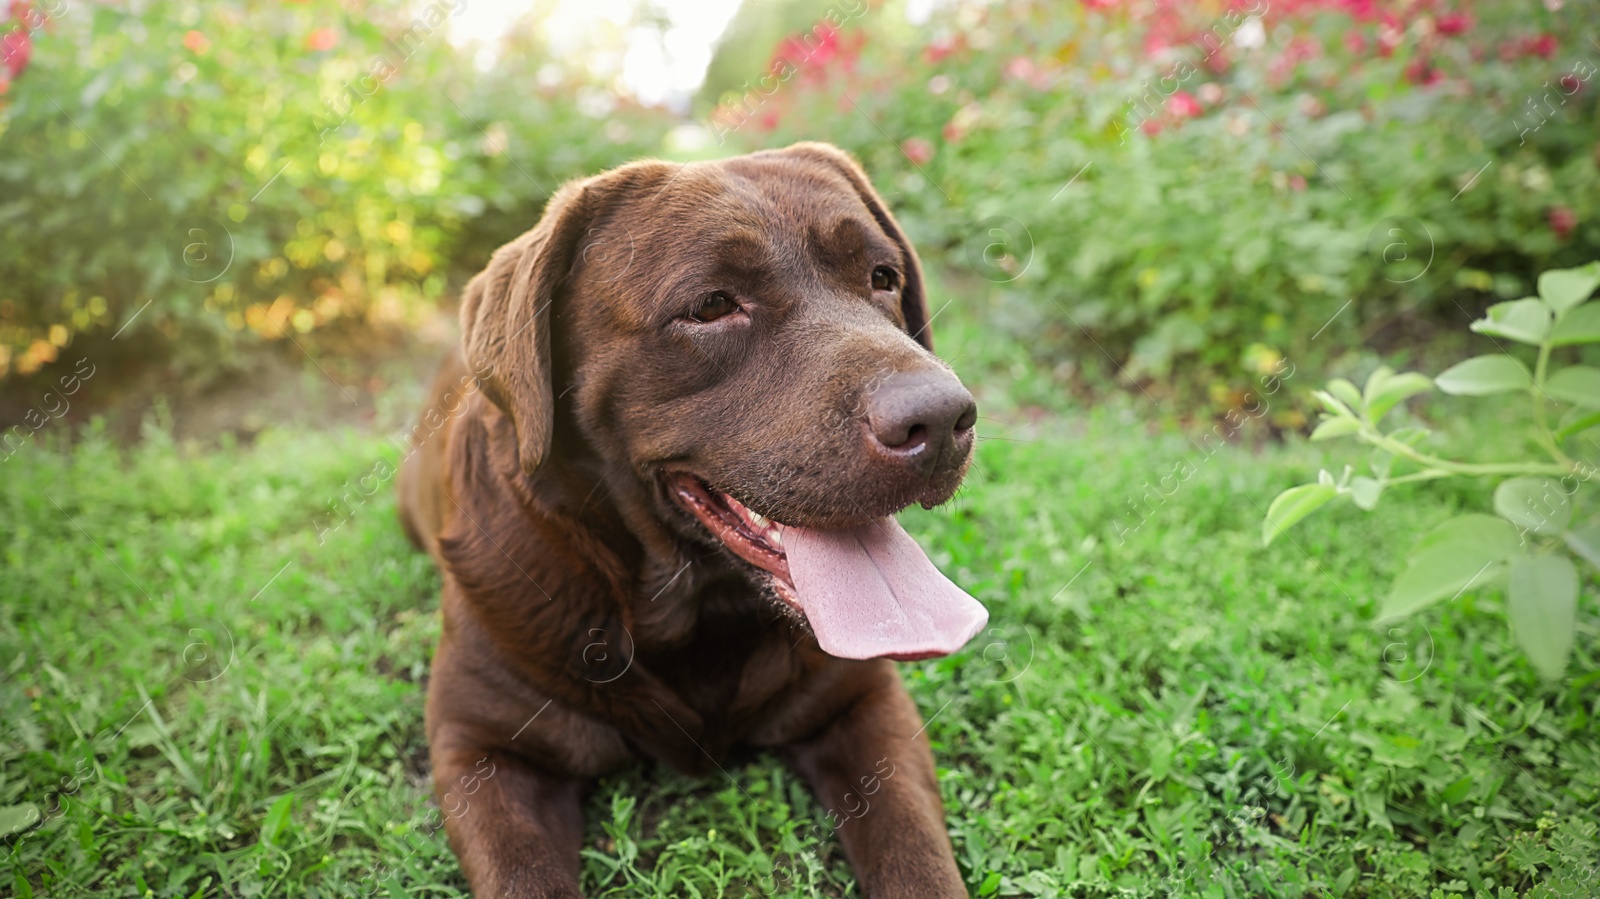 Photo of Cute Chocolate Labrador Retriever dog on green grass in park